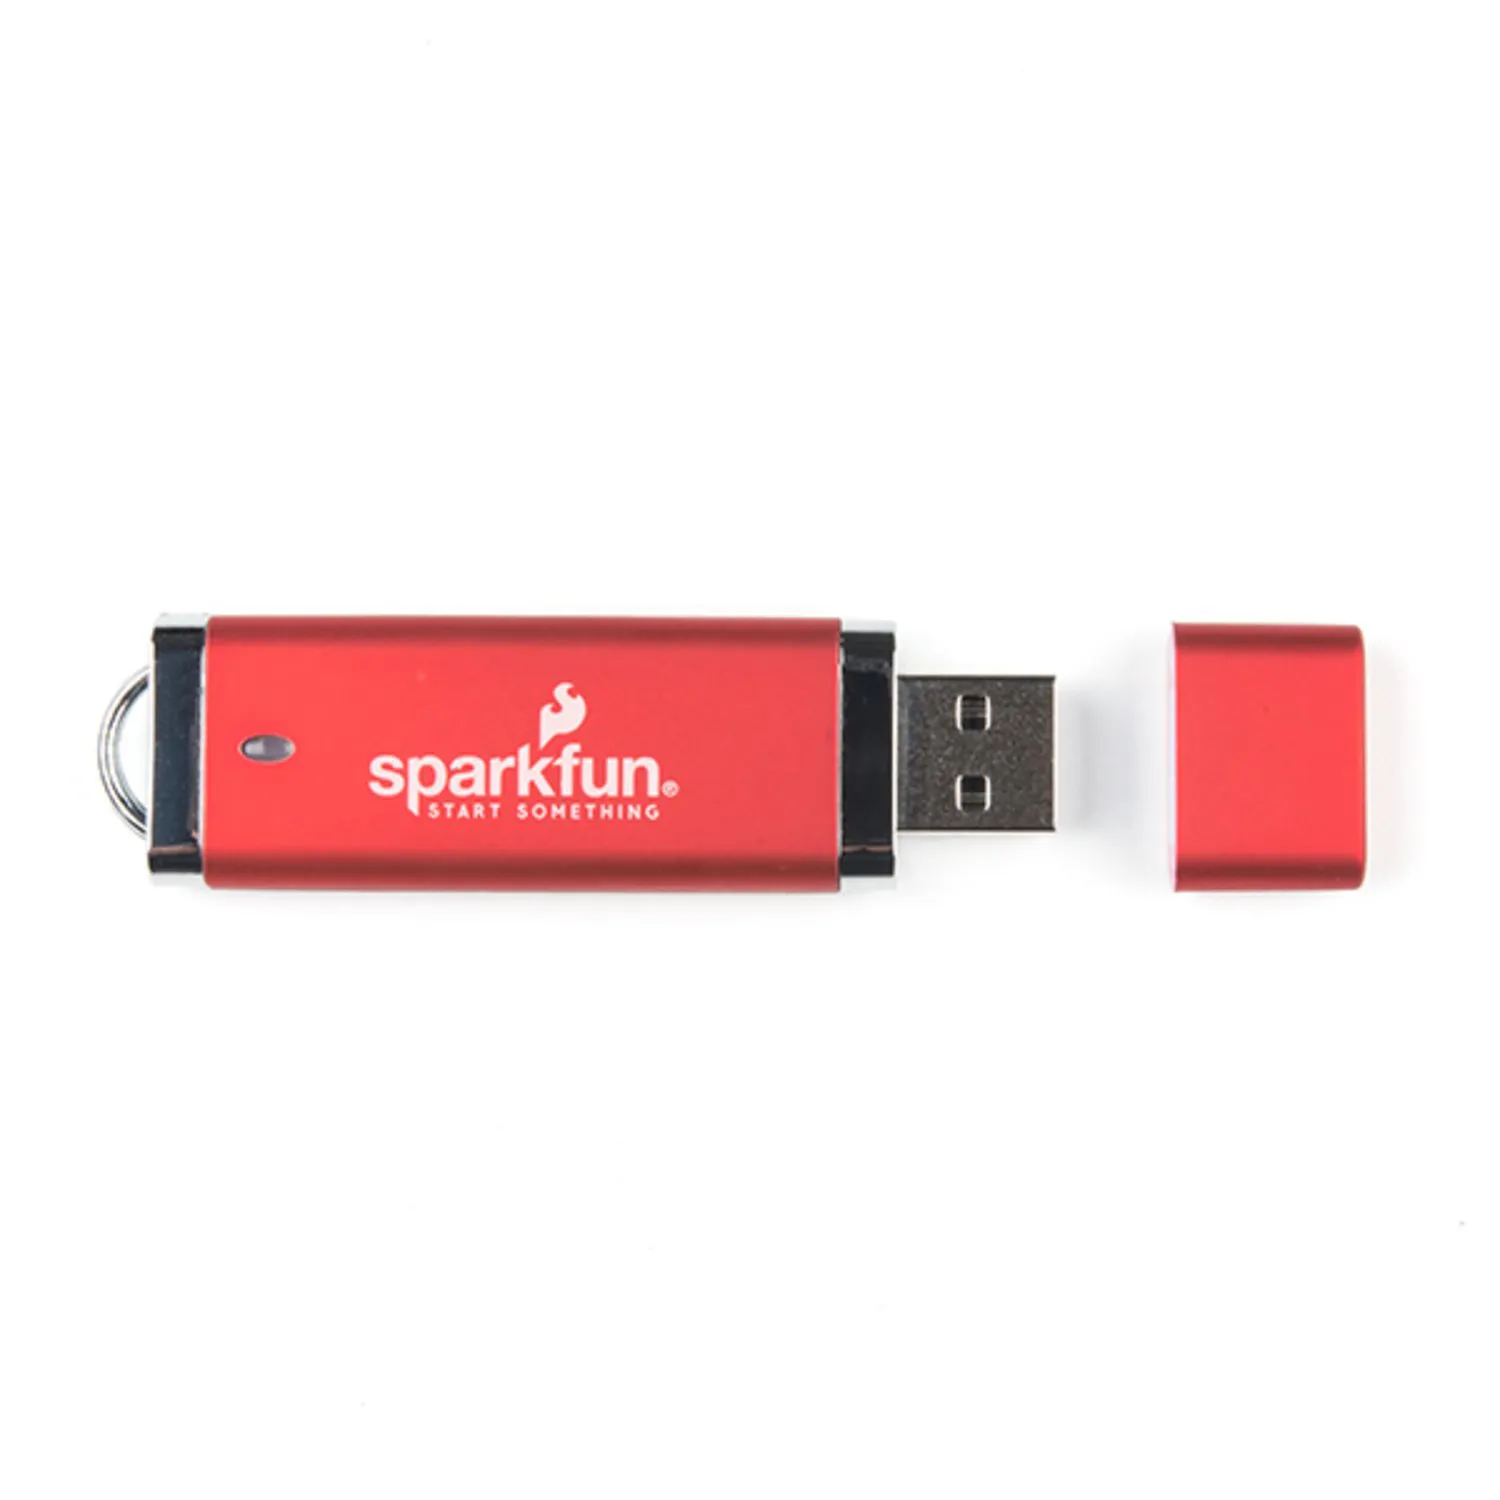 Photo of SparkFun USB Thumb Drive (16GB)